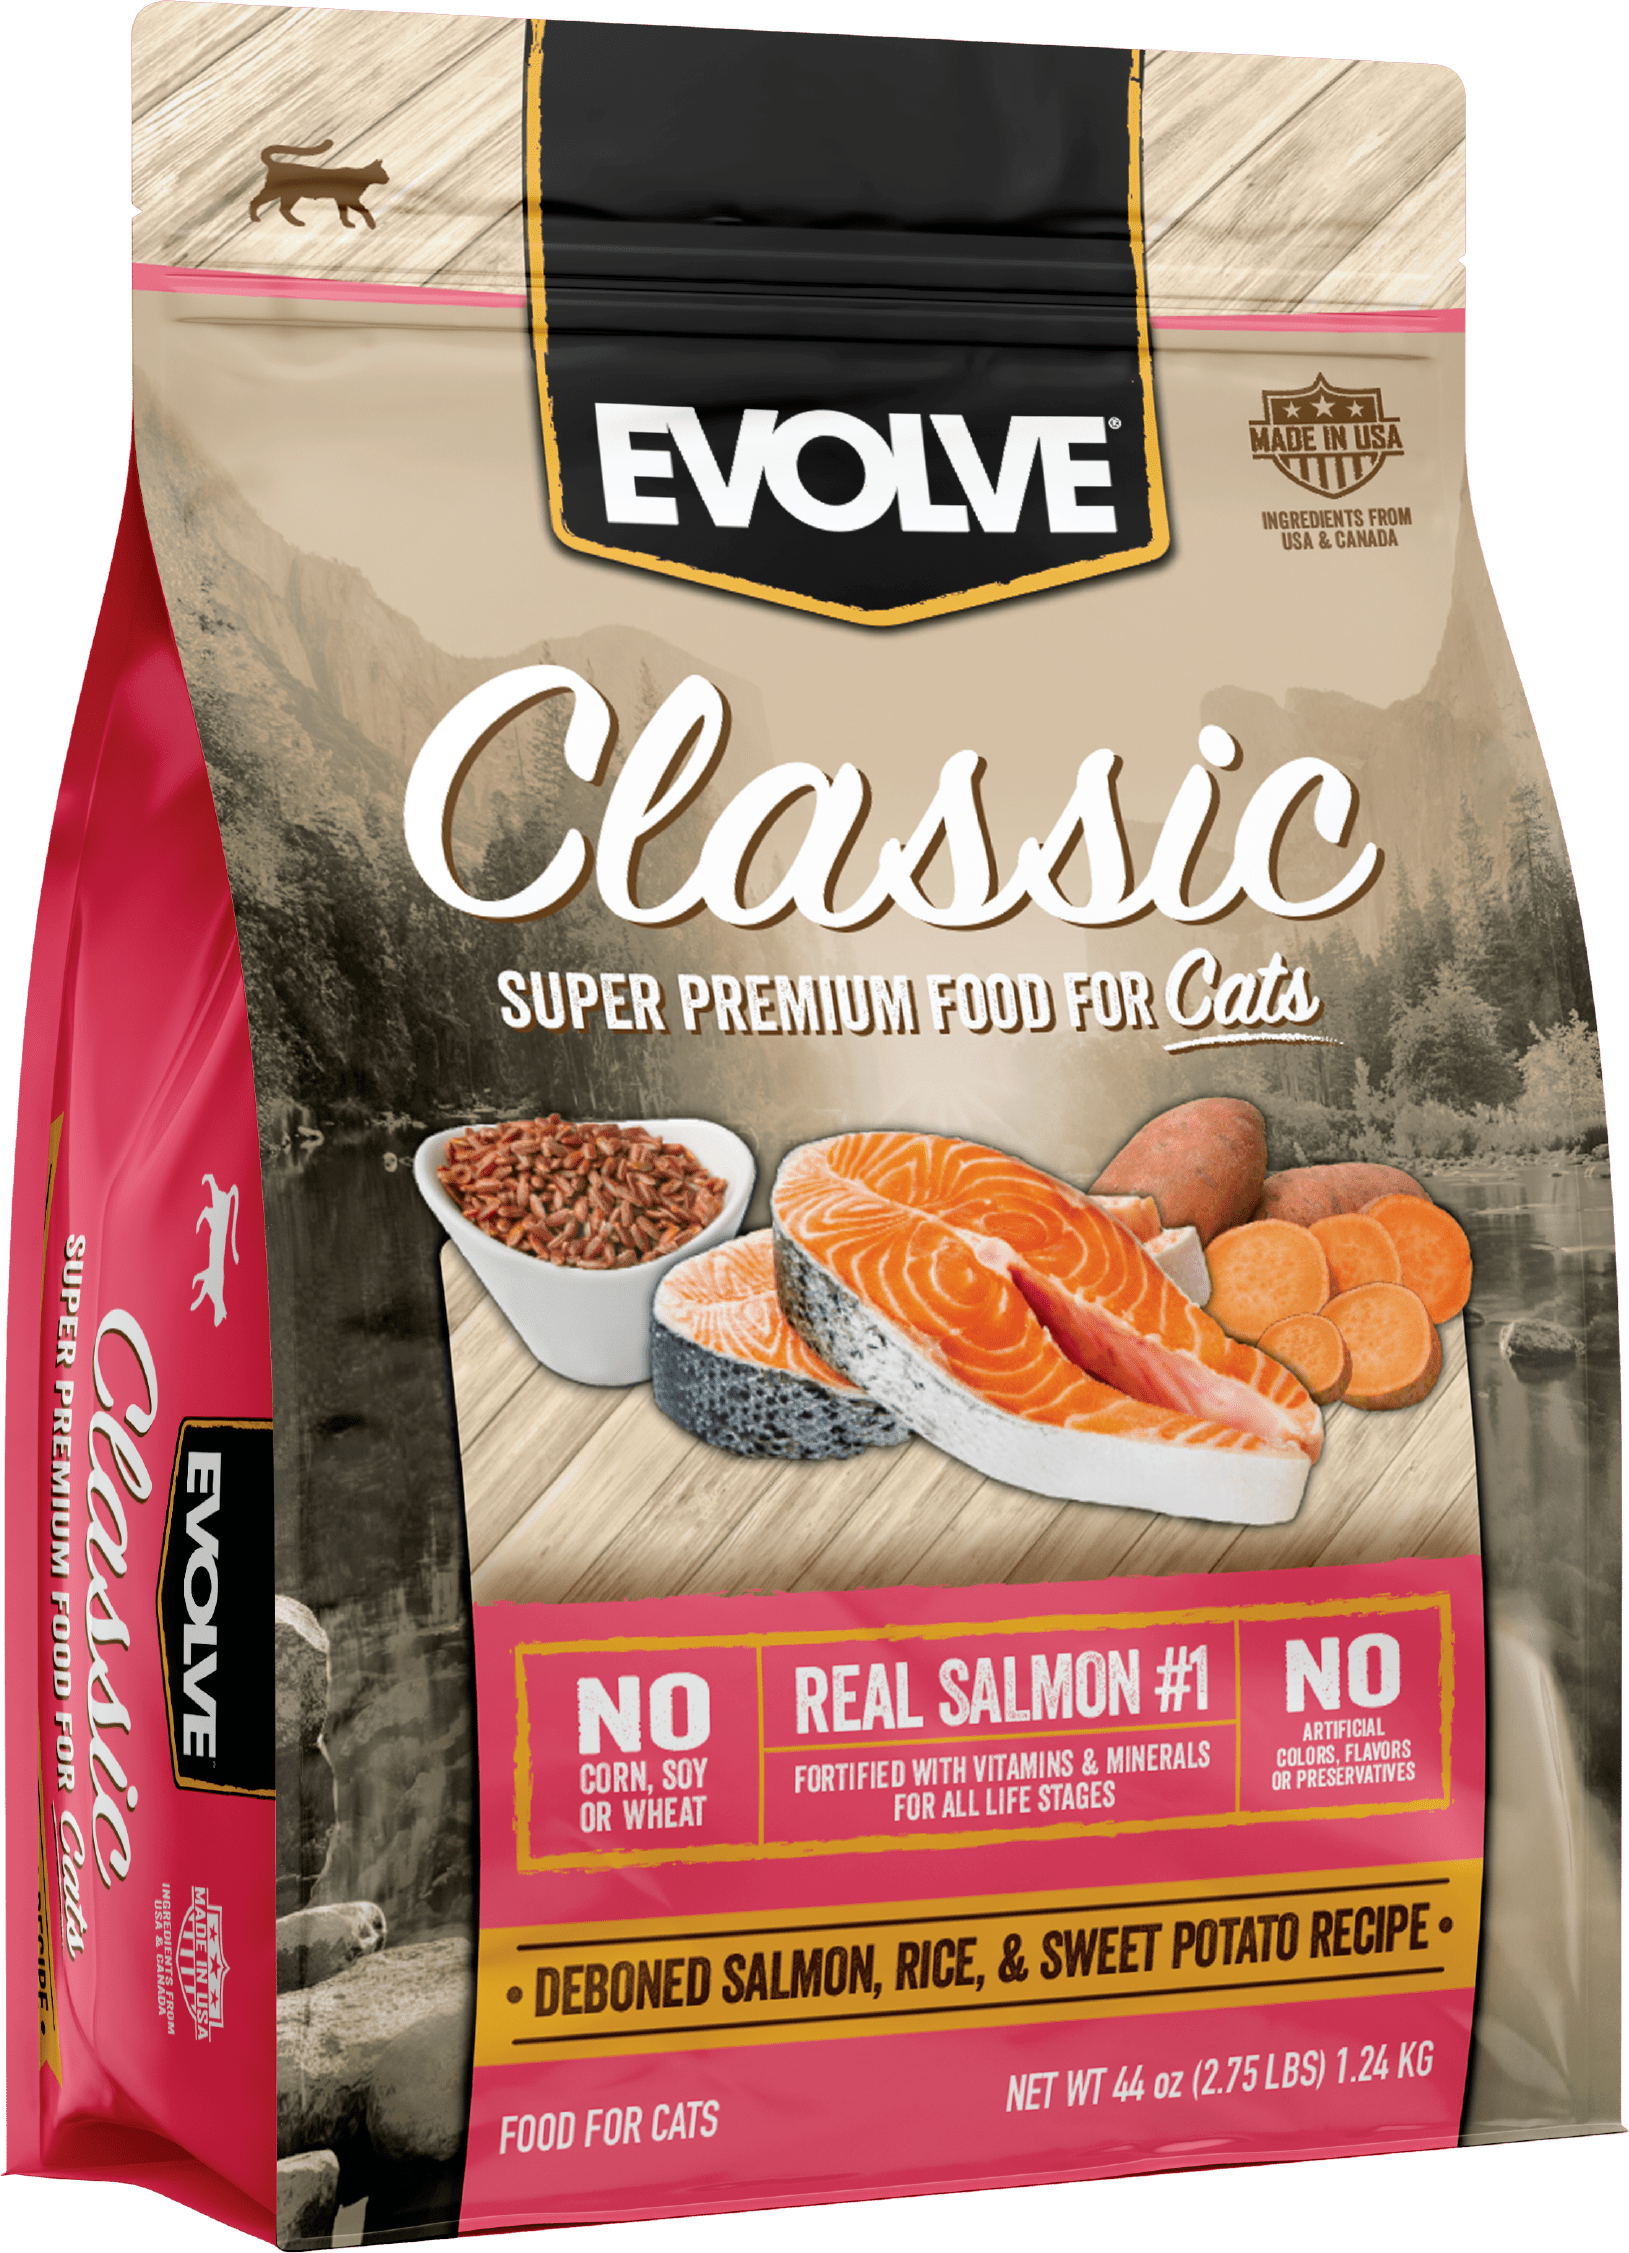 Evolve Classic Salmon, Rice, & Sweet Potato Recipe